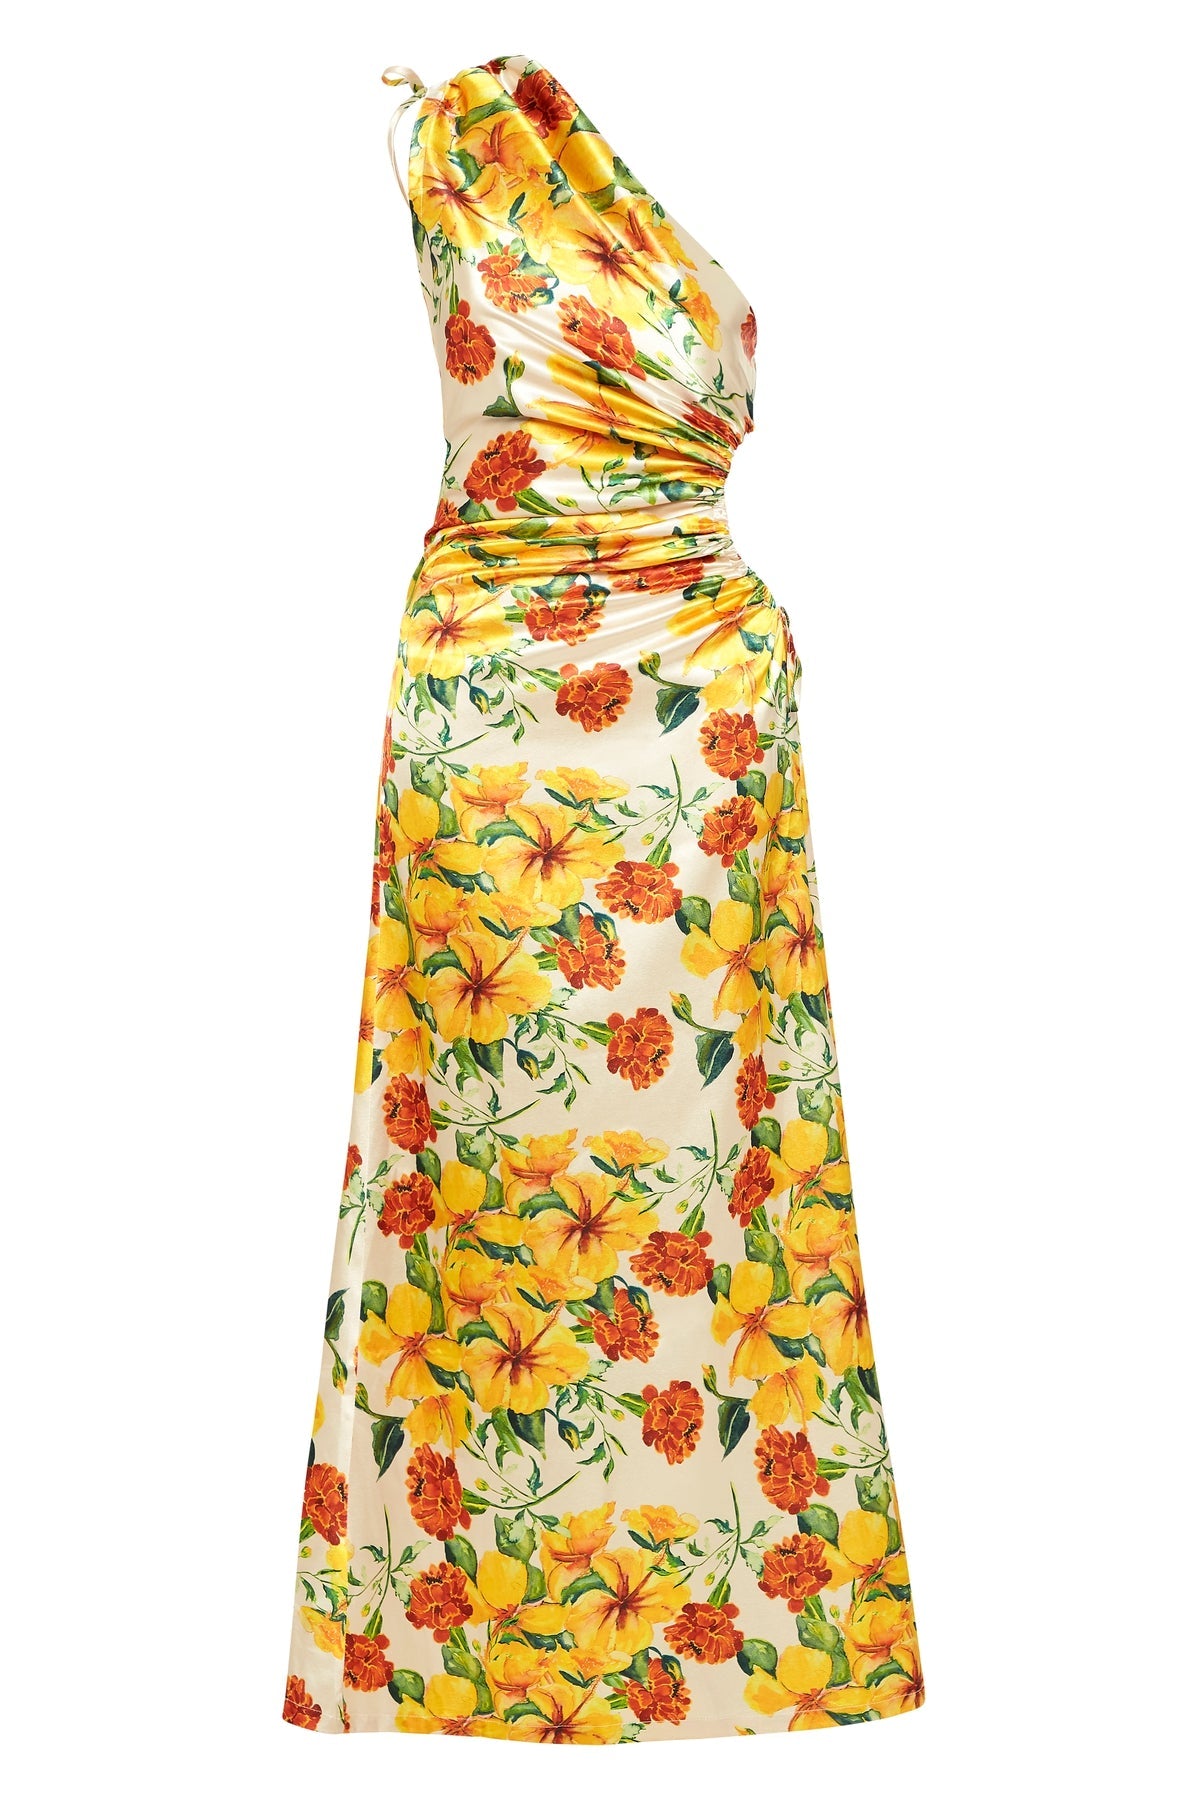 Sonya SONYA MODA Nour Yarden Floral Maxi Dress - RRP $380 - S17-Front-22104-SonyaModa-0033_1200x1800_a973c9d5-80b8-42cc-b0c5-a21f7d66ad58.jpg